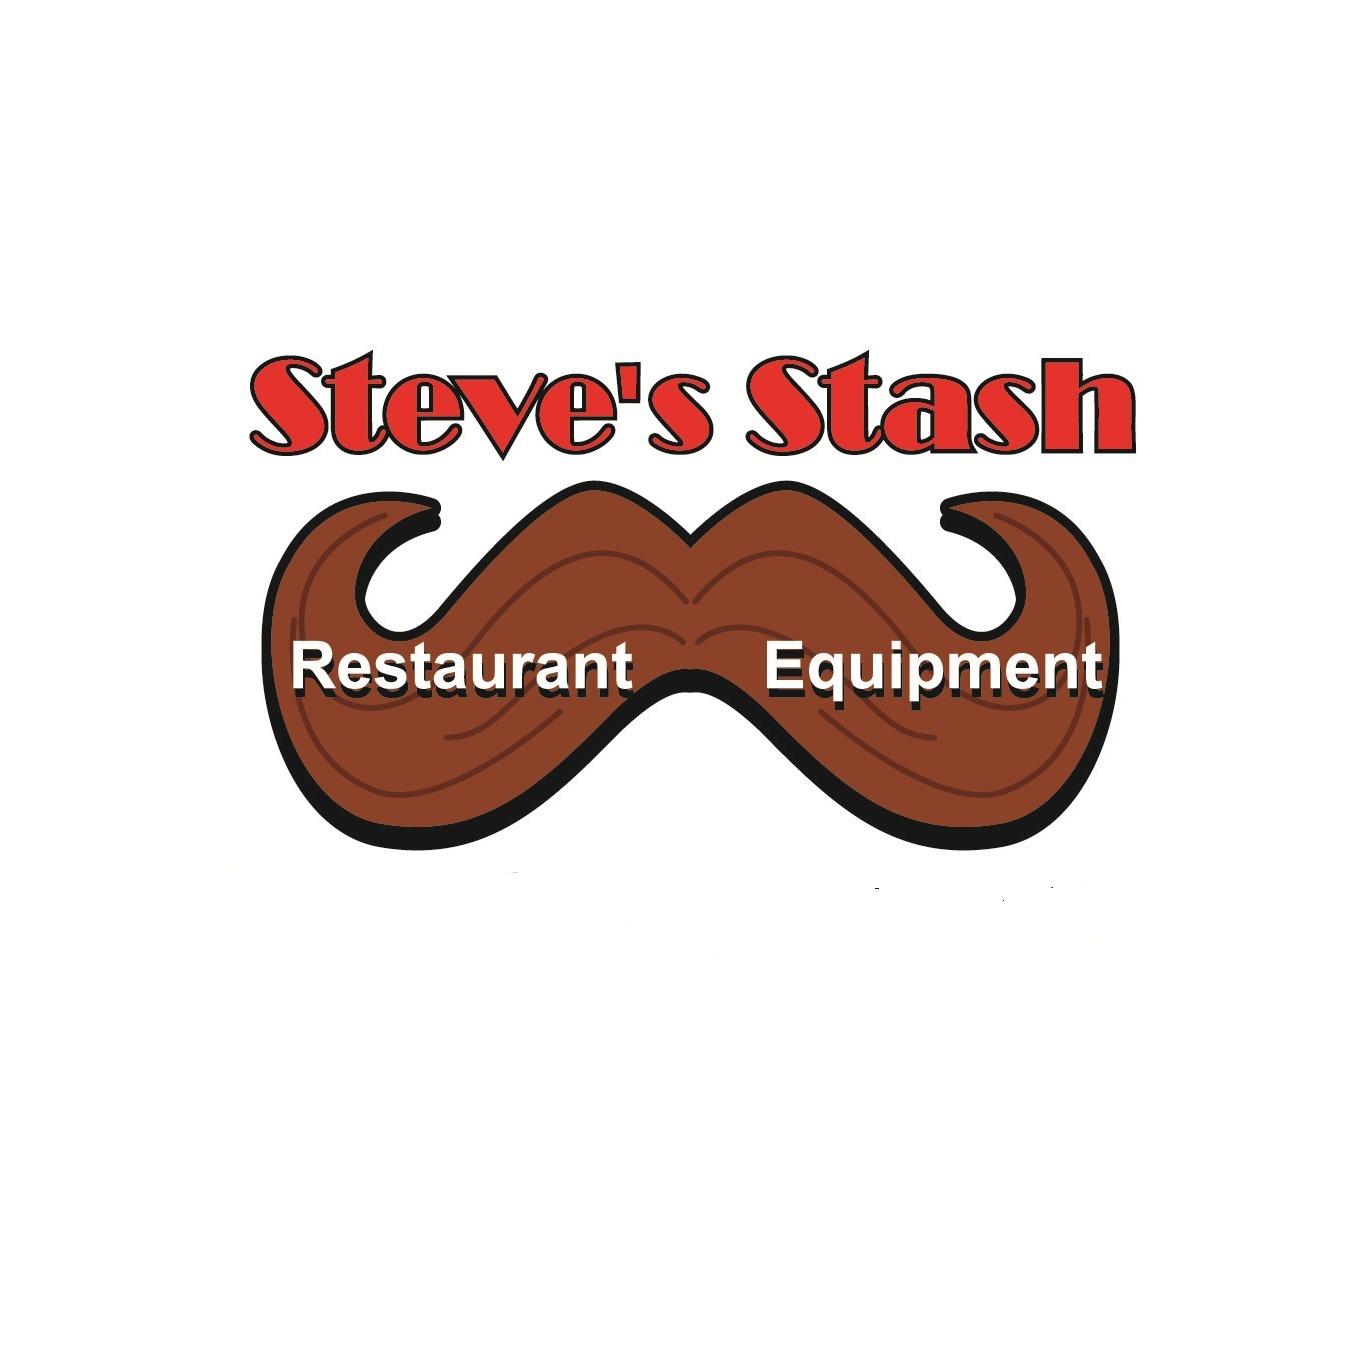 Steve's Stash